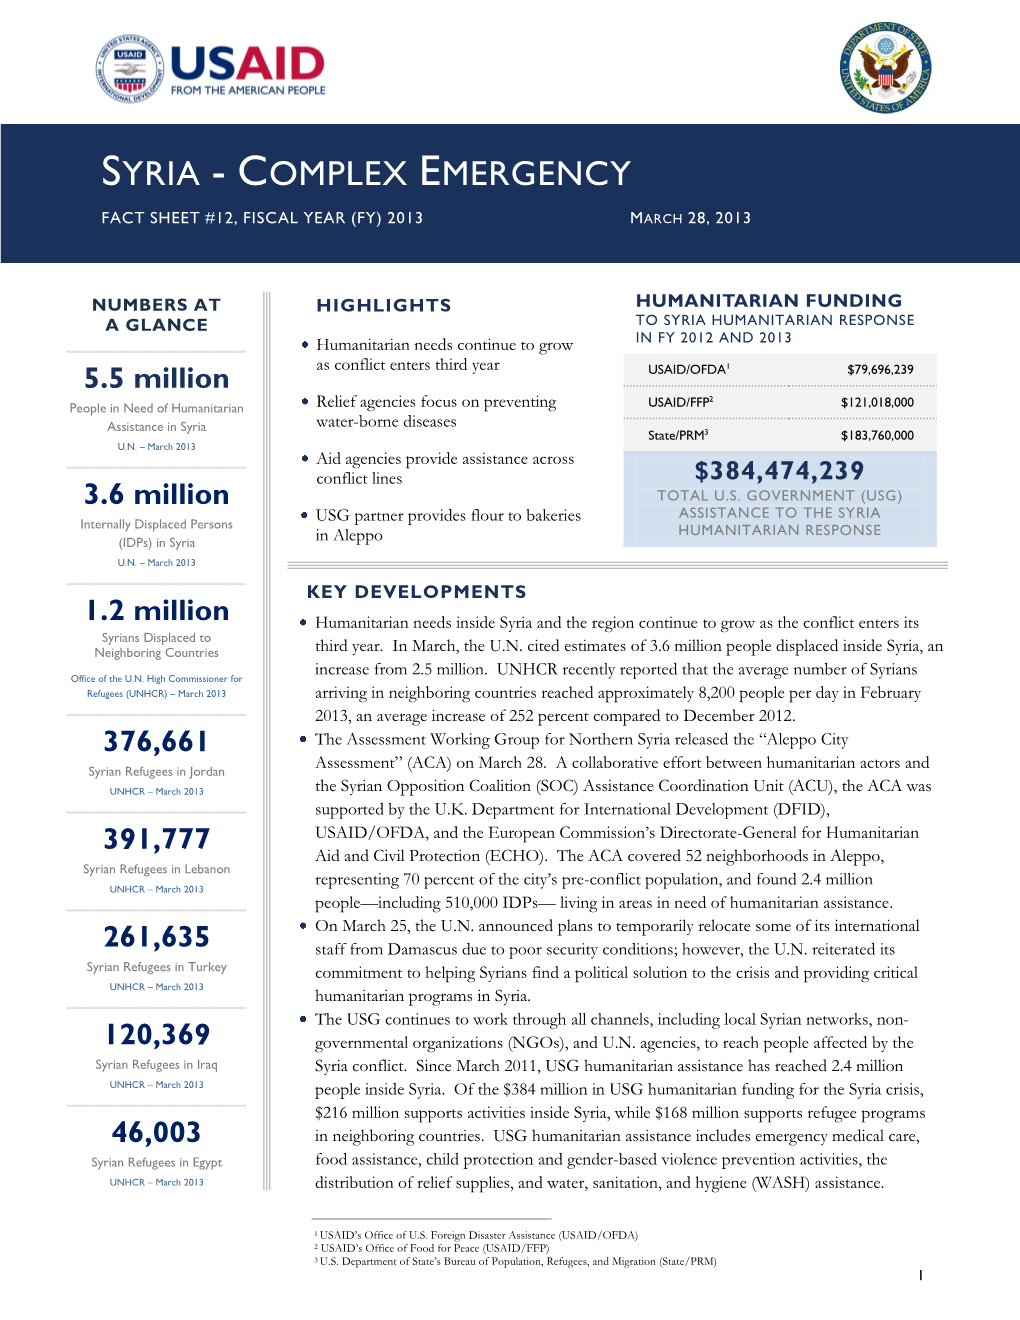 USG Syria Complex Emergency Fact Sheet